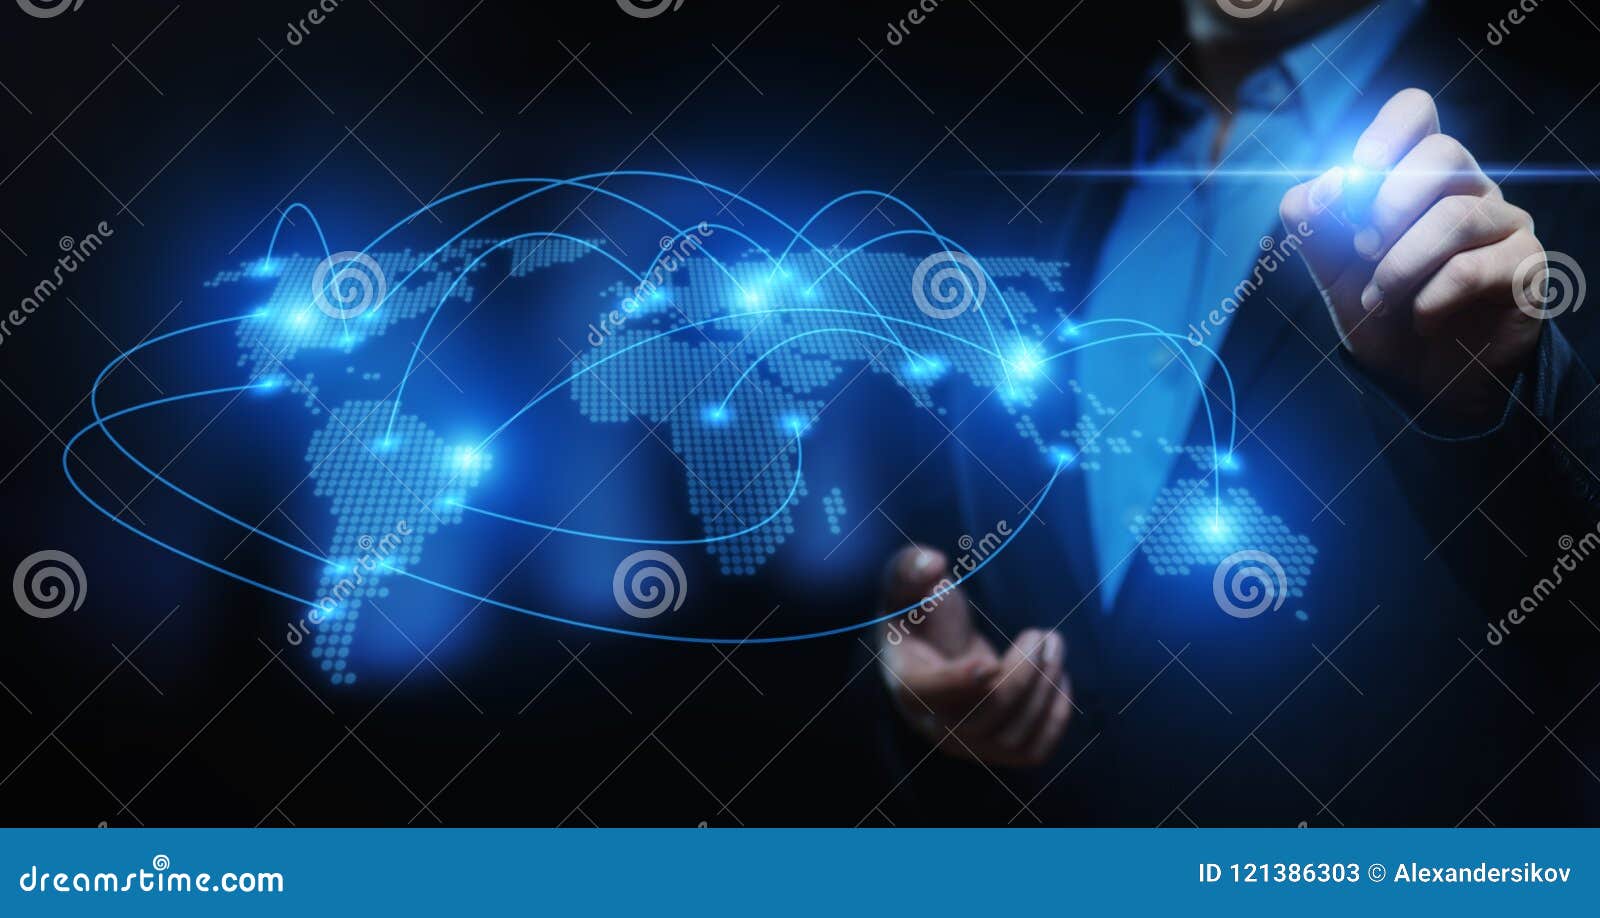 global worldwide communication businesss network technology internet concept